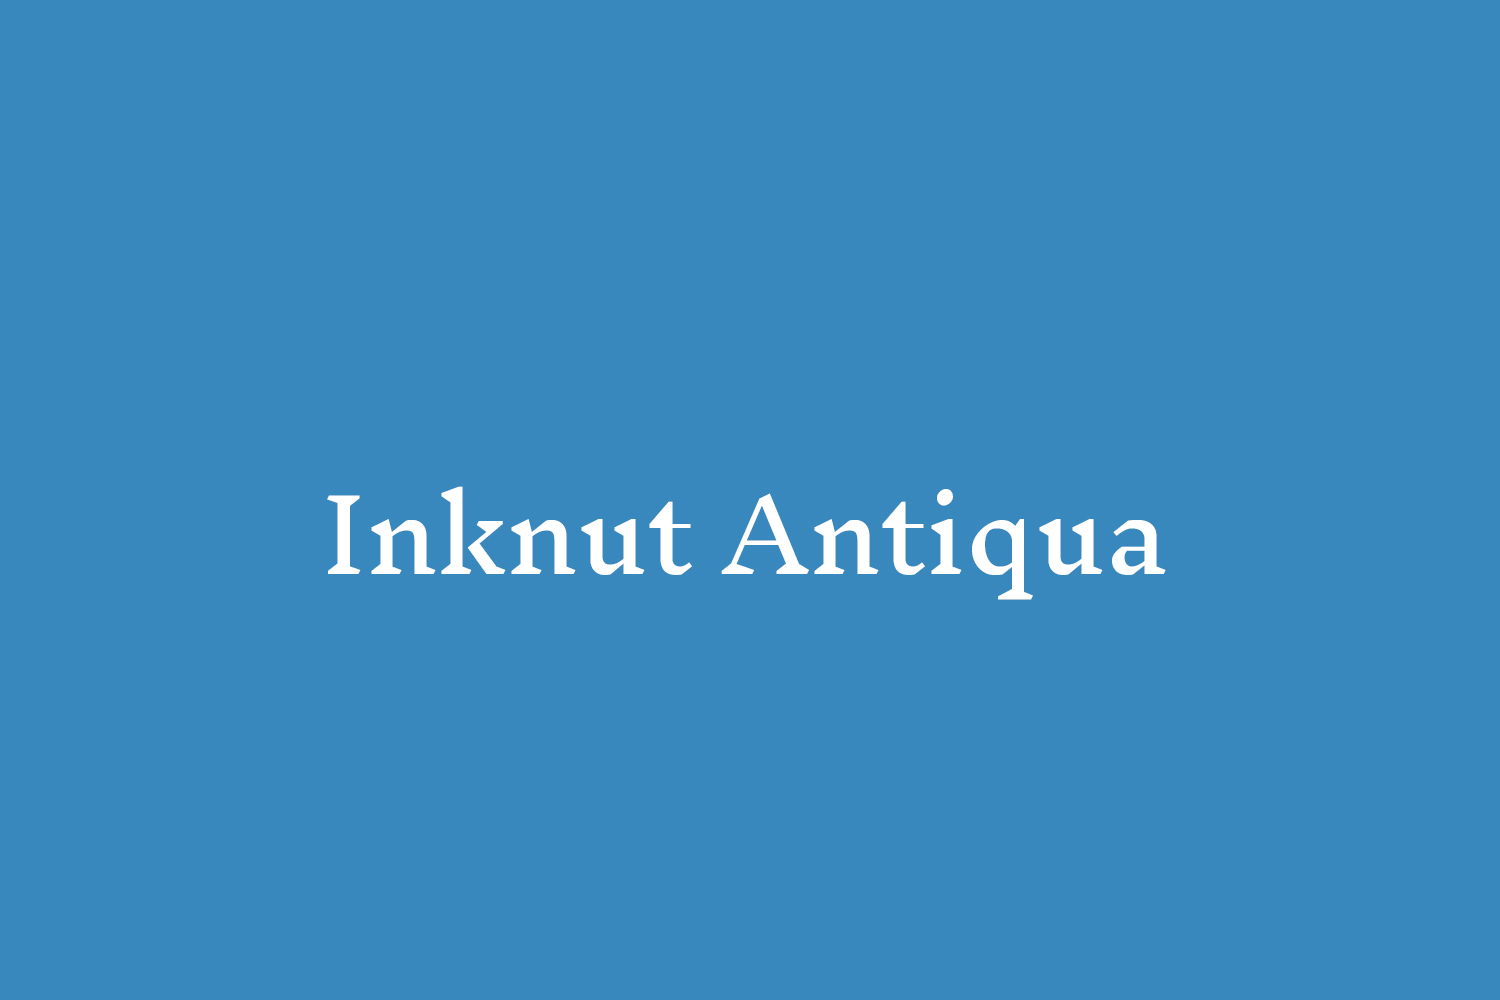 Inknut Antiqua